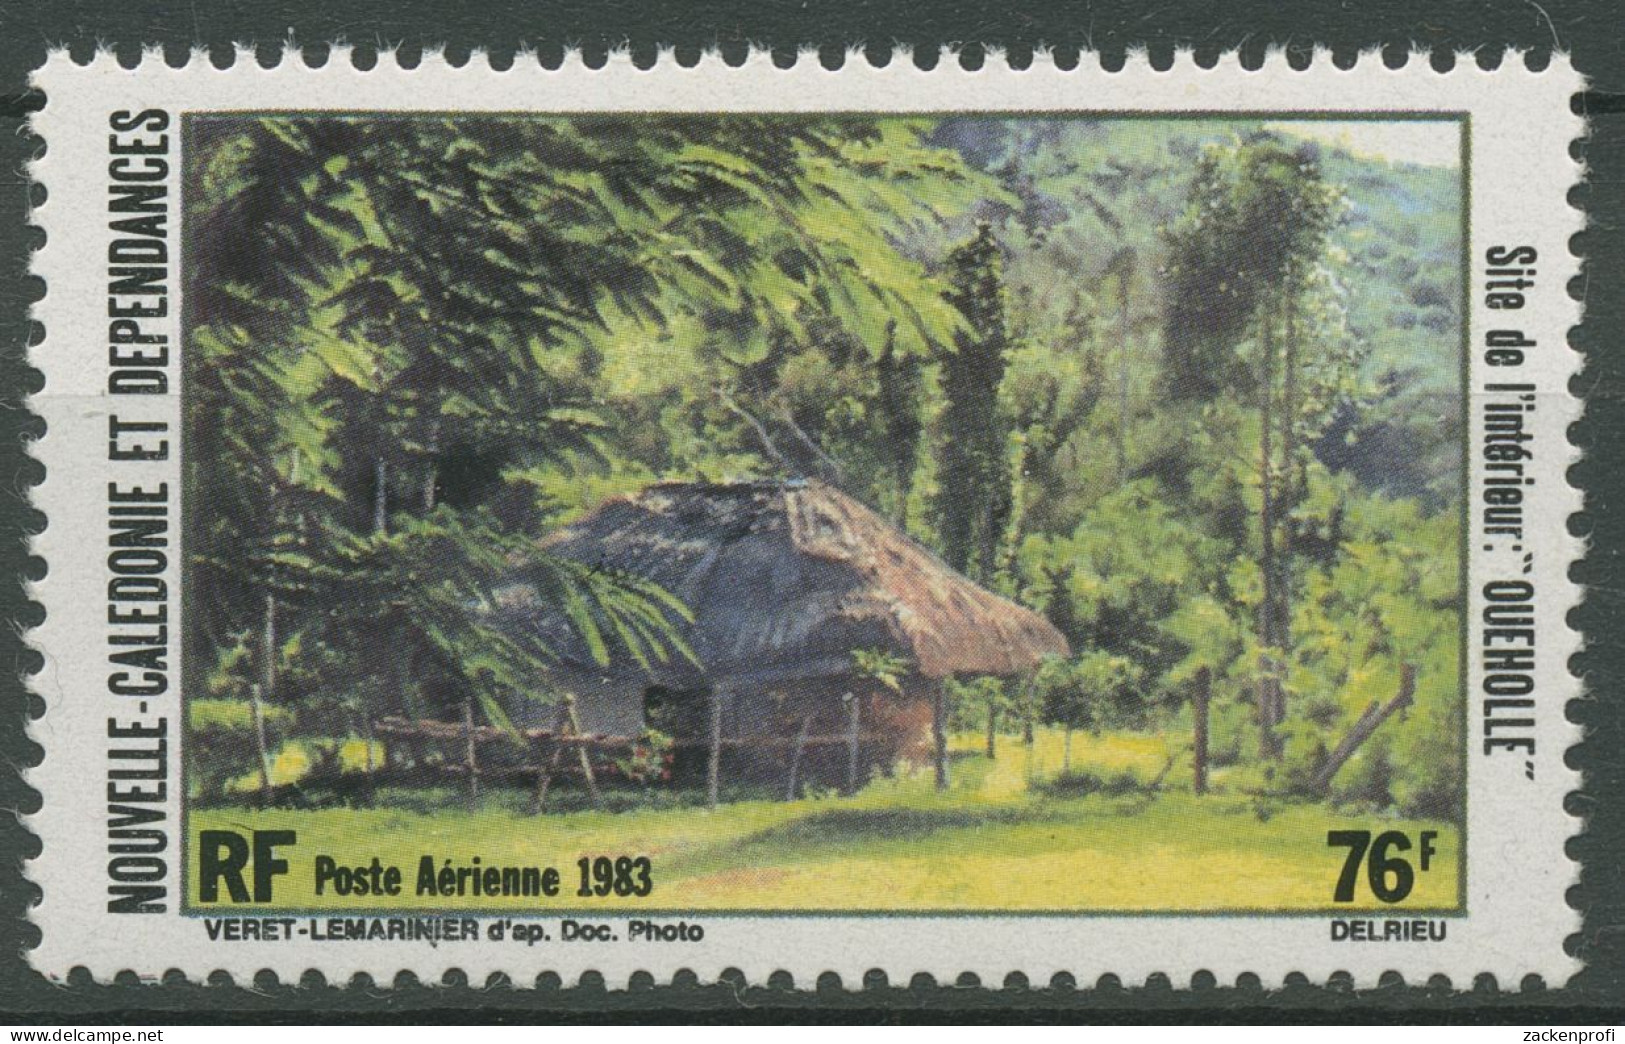 Neukaledonien 1983 Landschaften Wald Ouéholle 722 Postfrisch - Nuevos